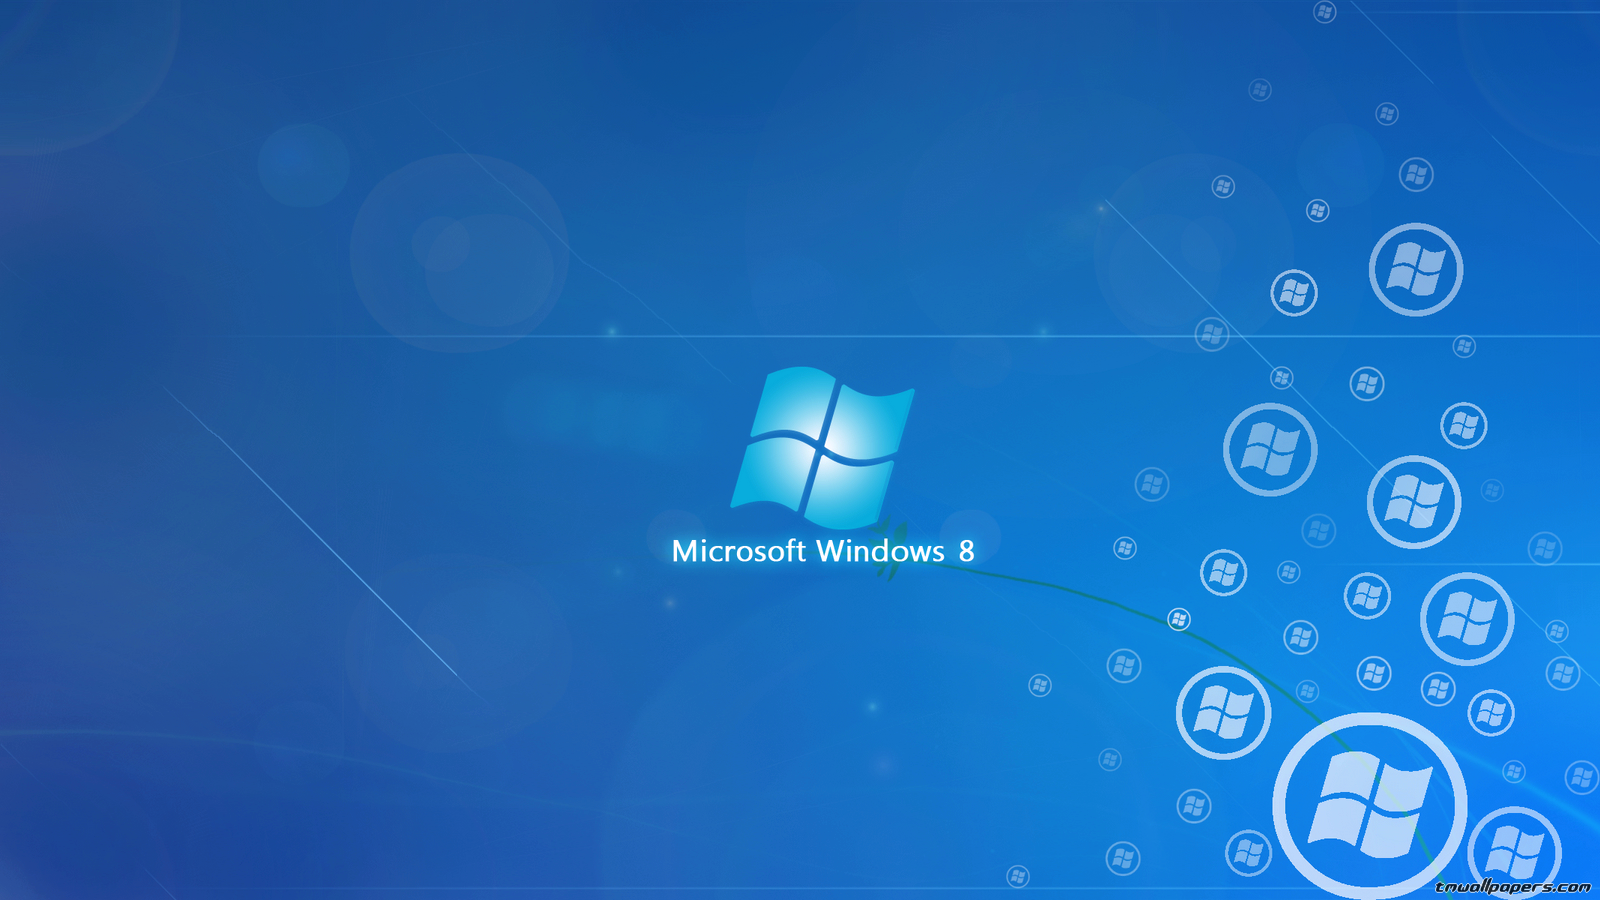 Windows 10 Wallpaper 1600X900 - WallpaperSafari